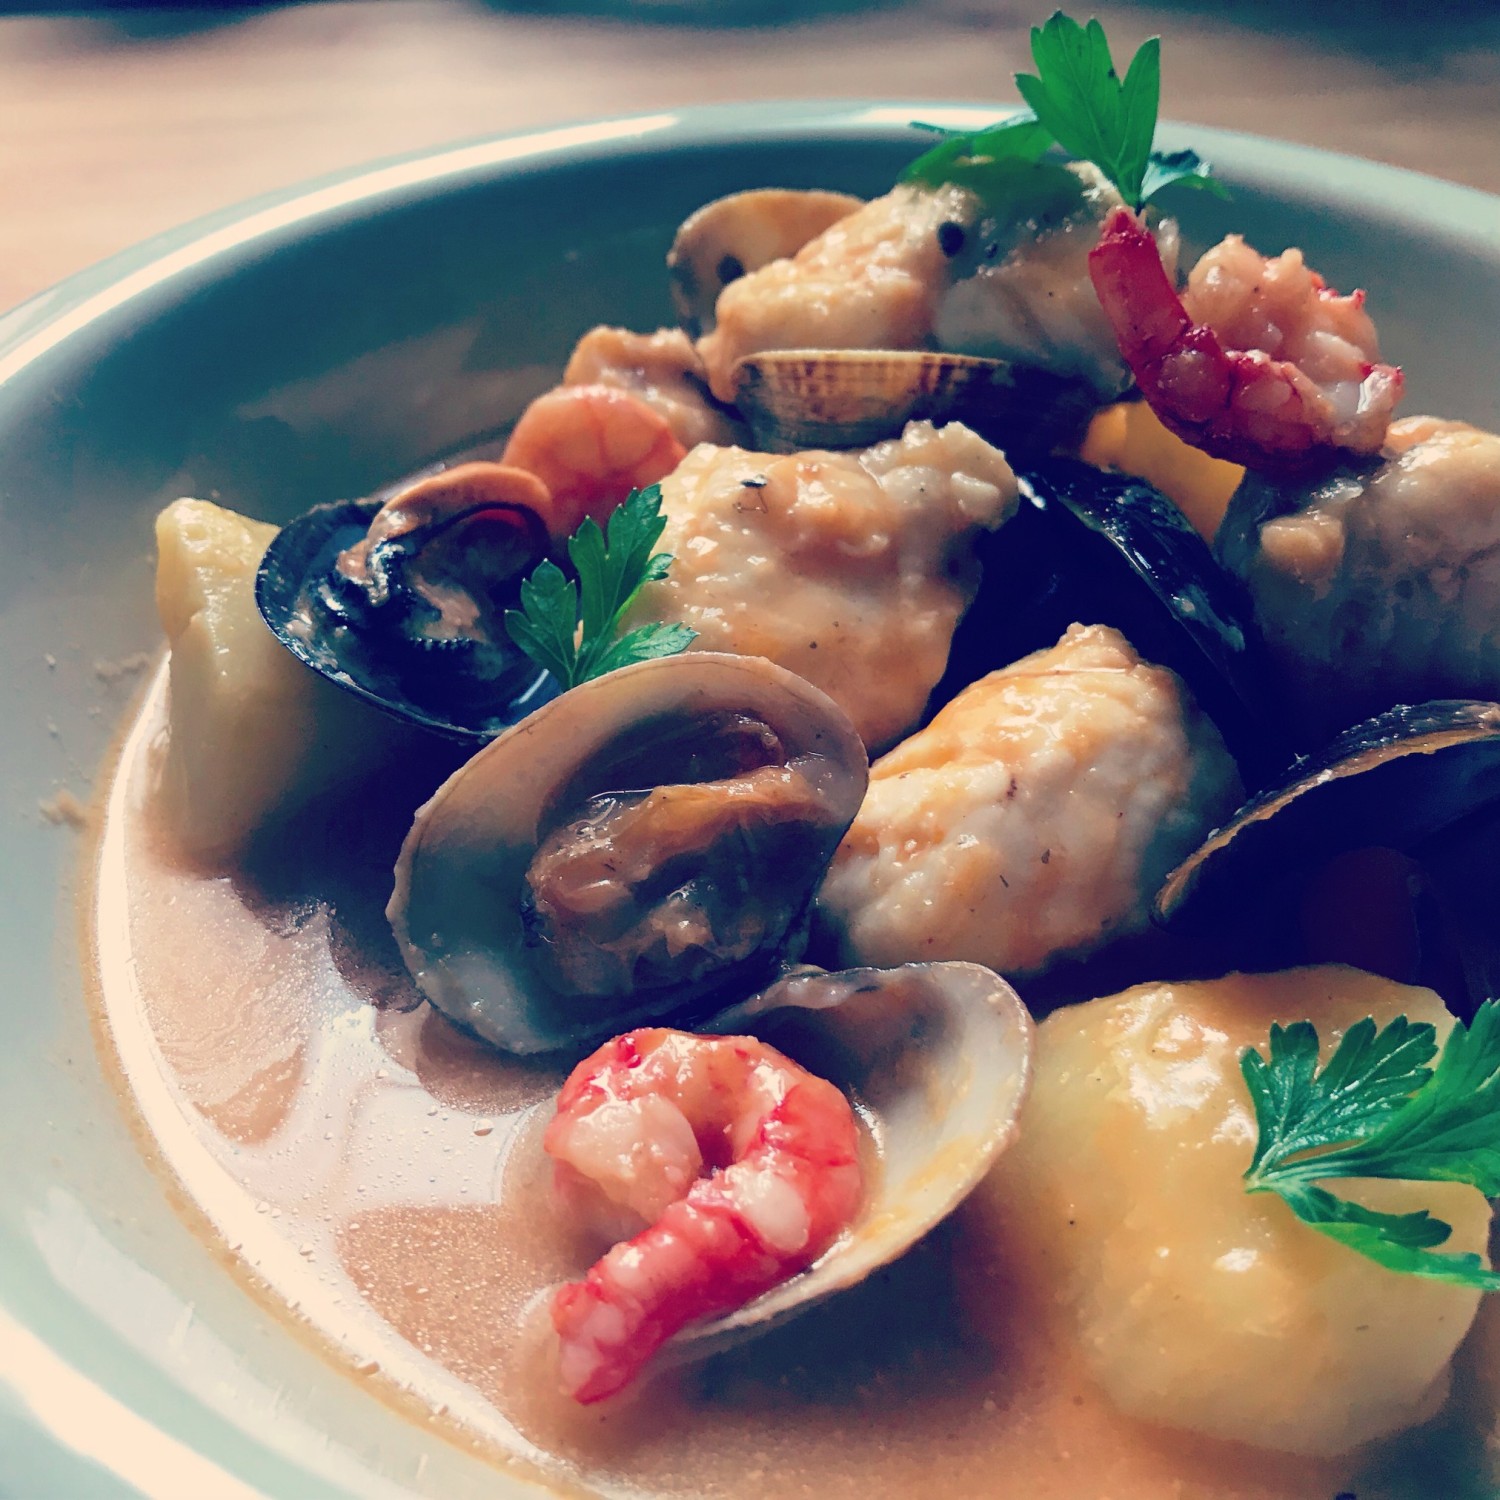 ‘Suquet de peix’ (fish stew) by Cook and Taste